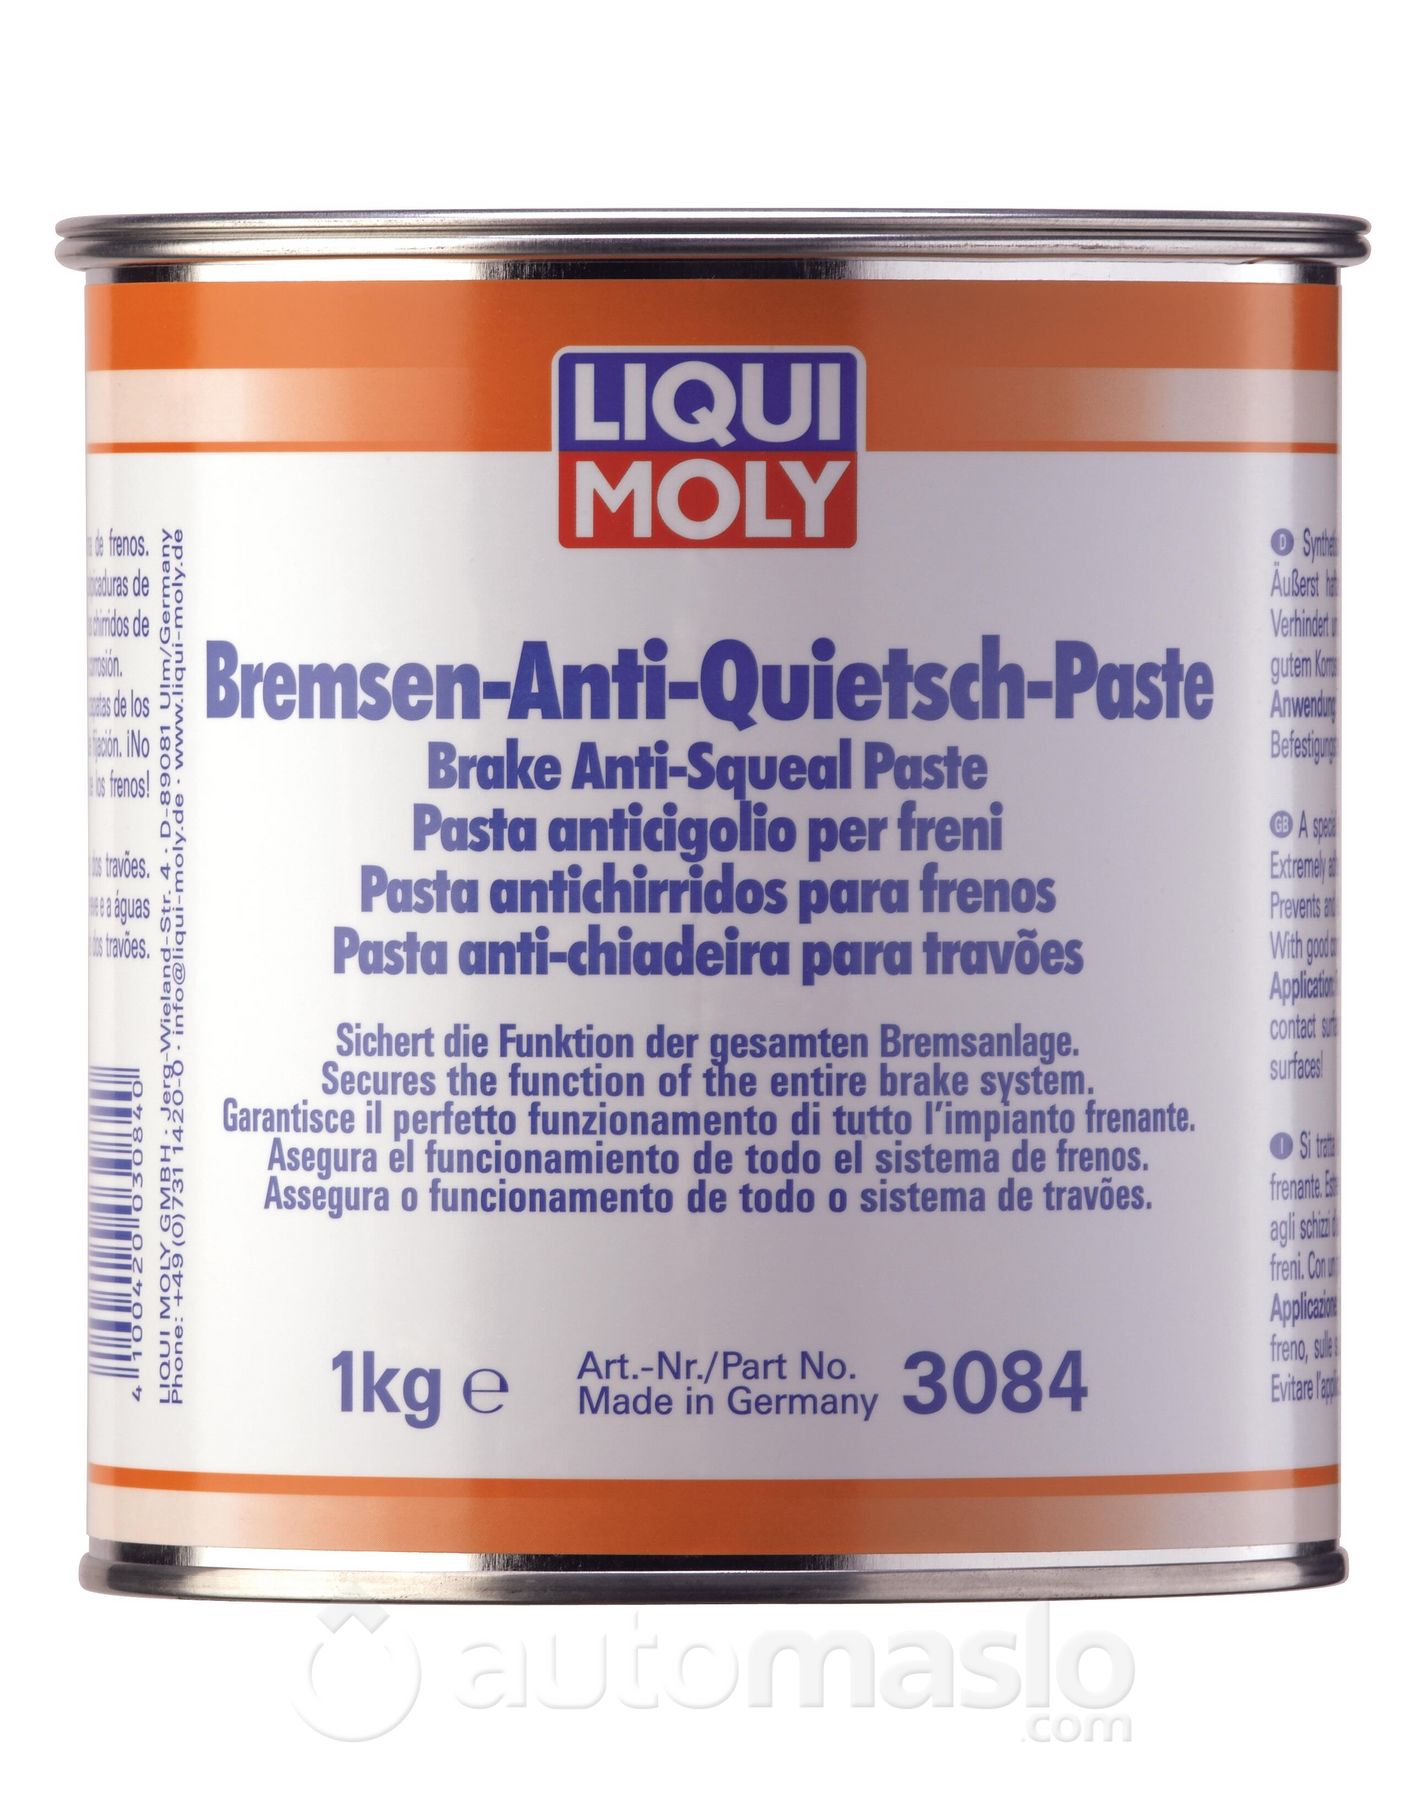 LIQUI MOLY Bremsen-Anti-Quietsch-Paste